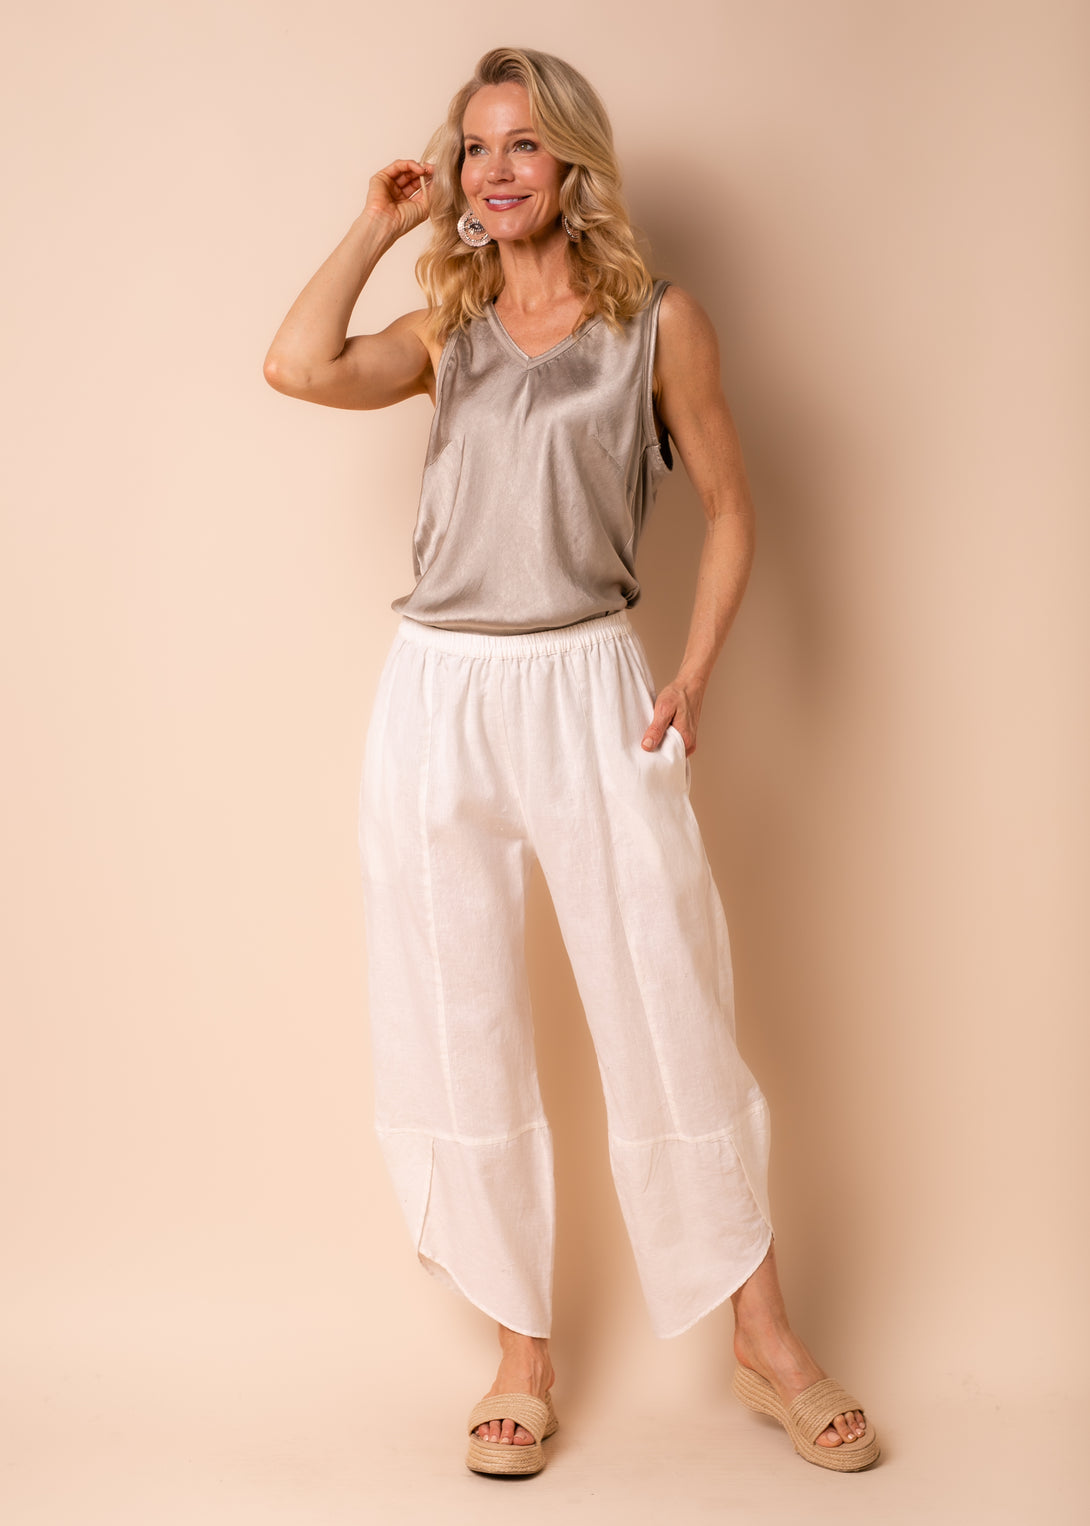 Rowen Linen Blend Pants in Cream - Imagine Fashion